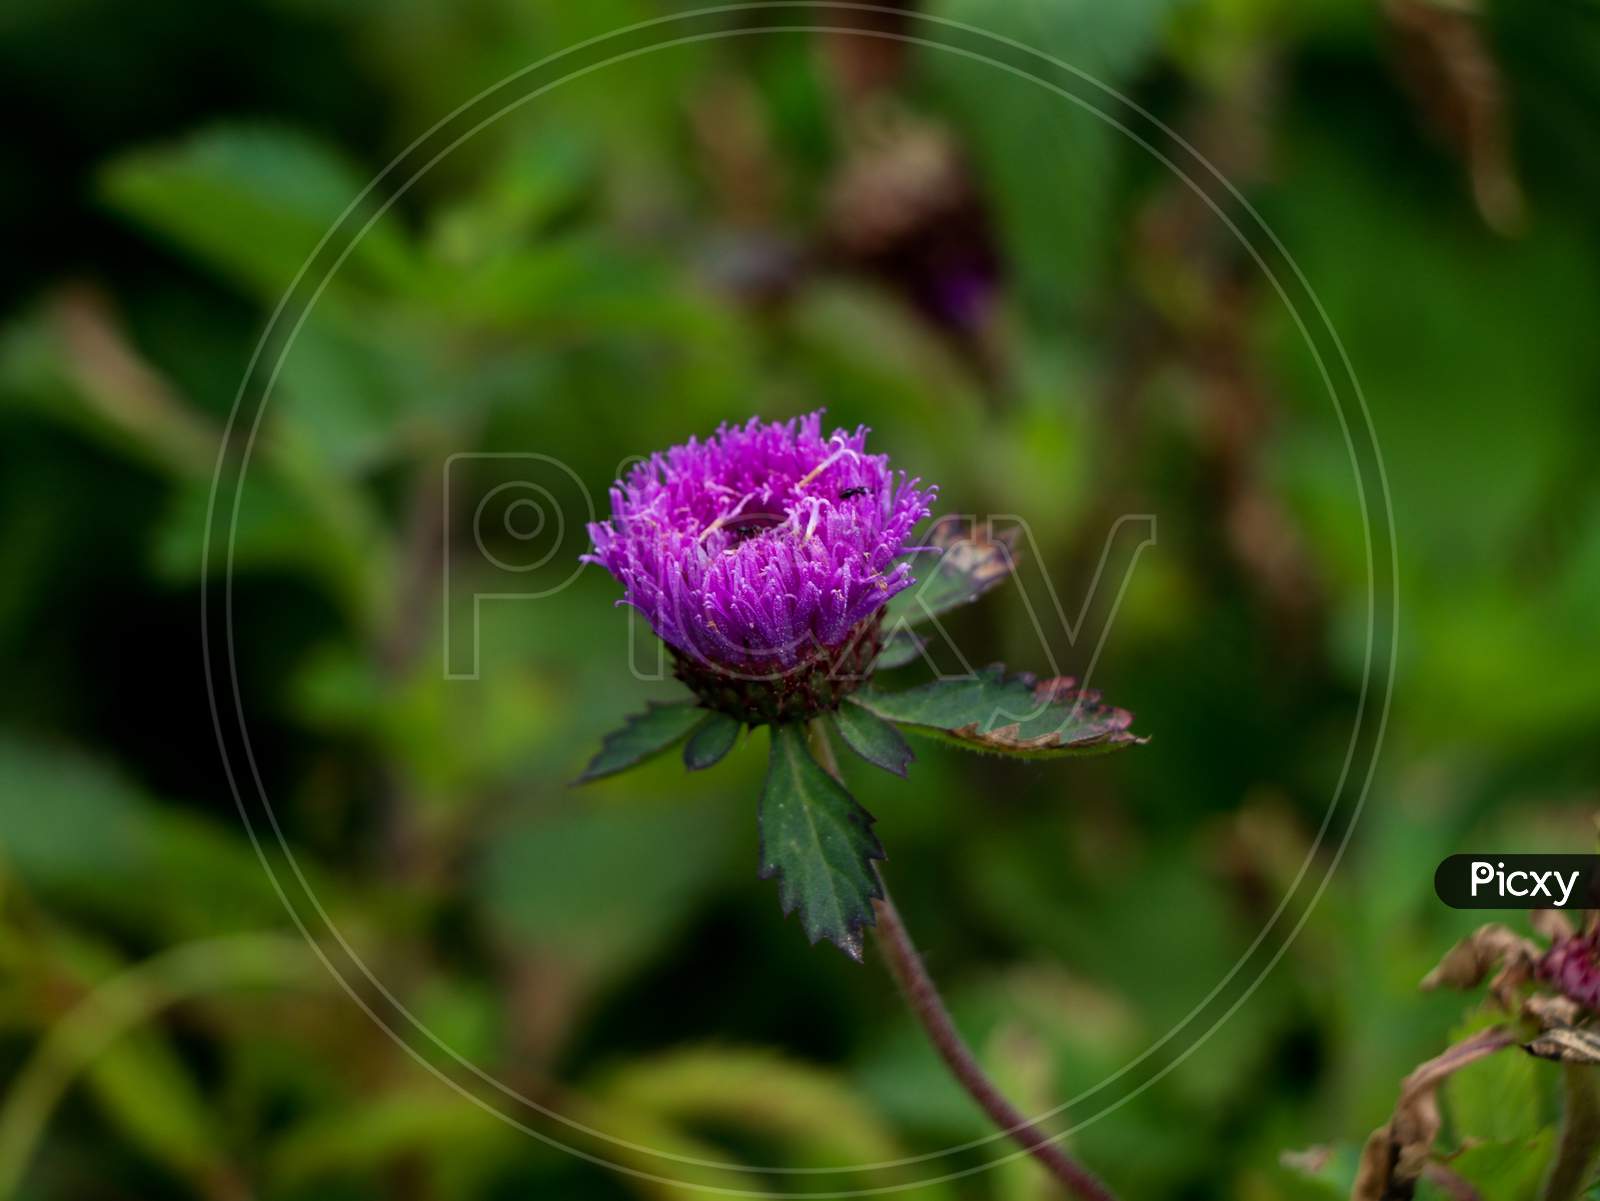 Brazilian Button Flower In A Showy Blue-Purple Color, Selective Focus